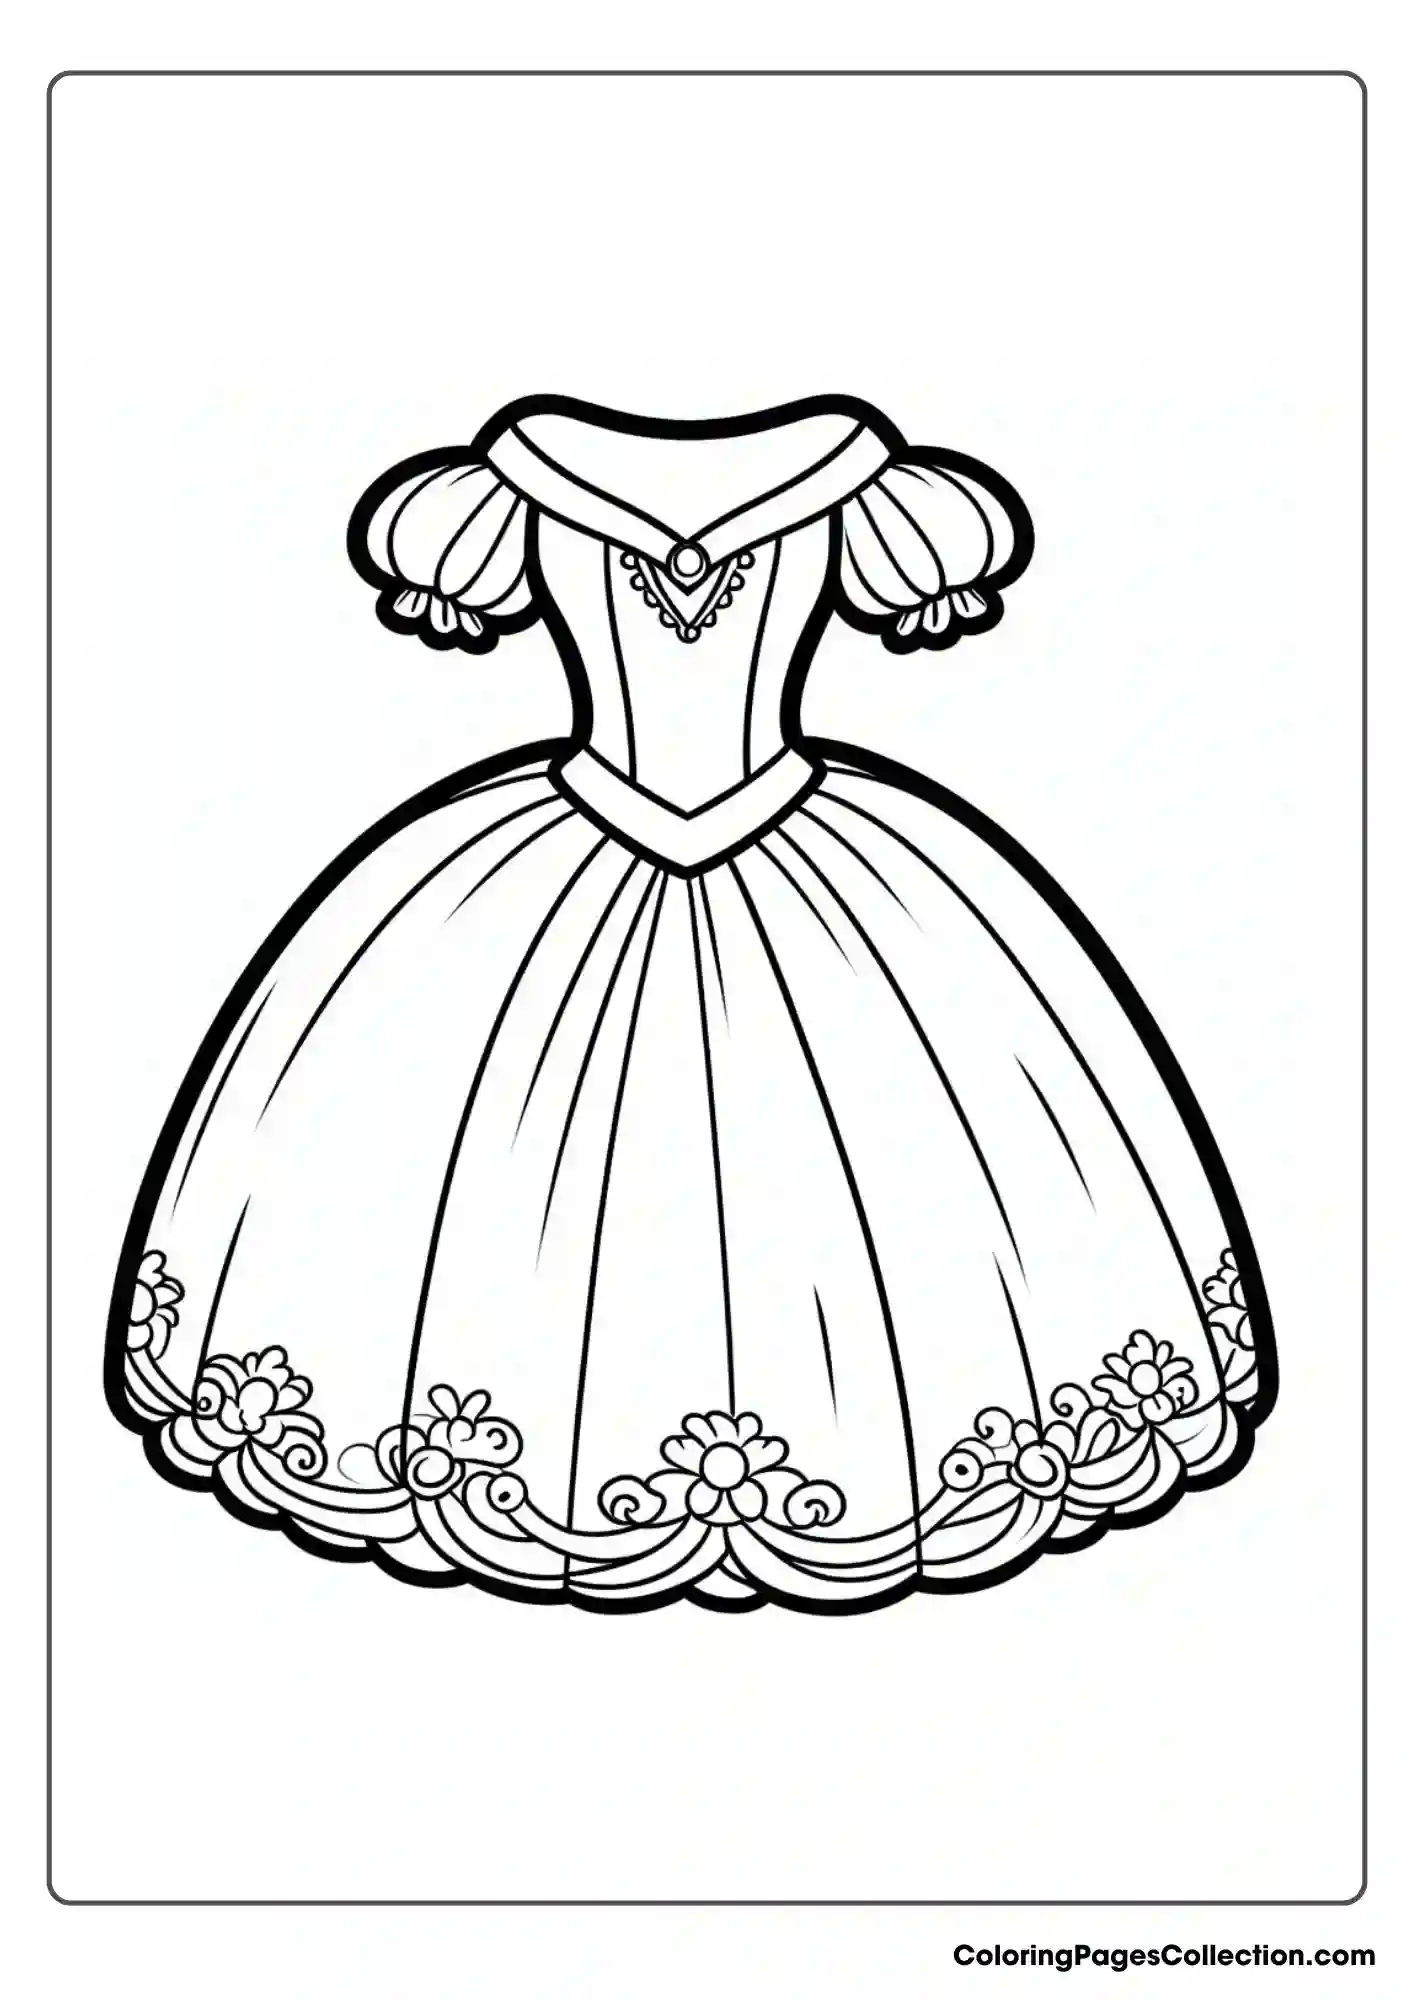 A Princess Dress With An Off-the-shoulder Neckline